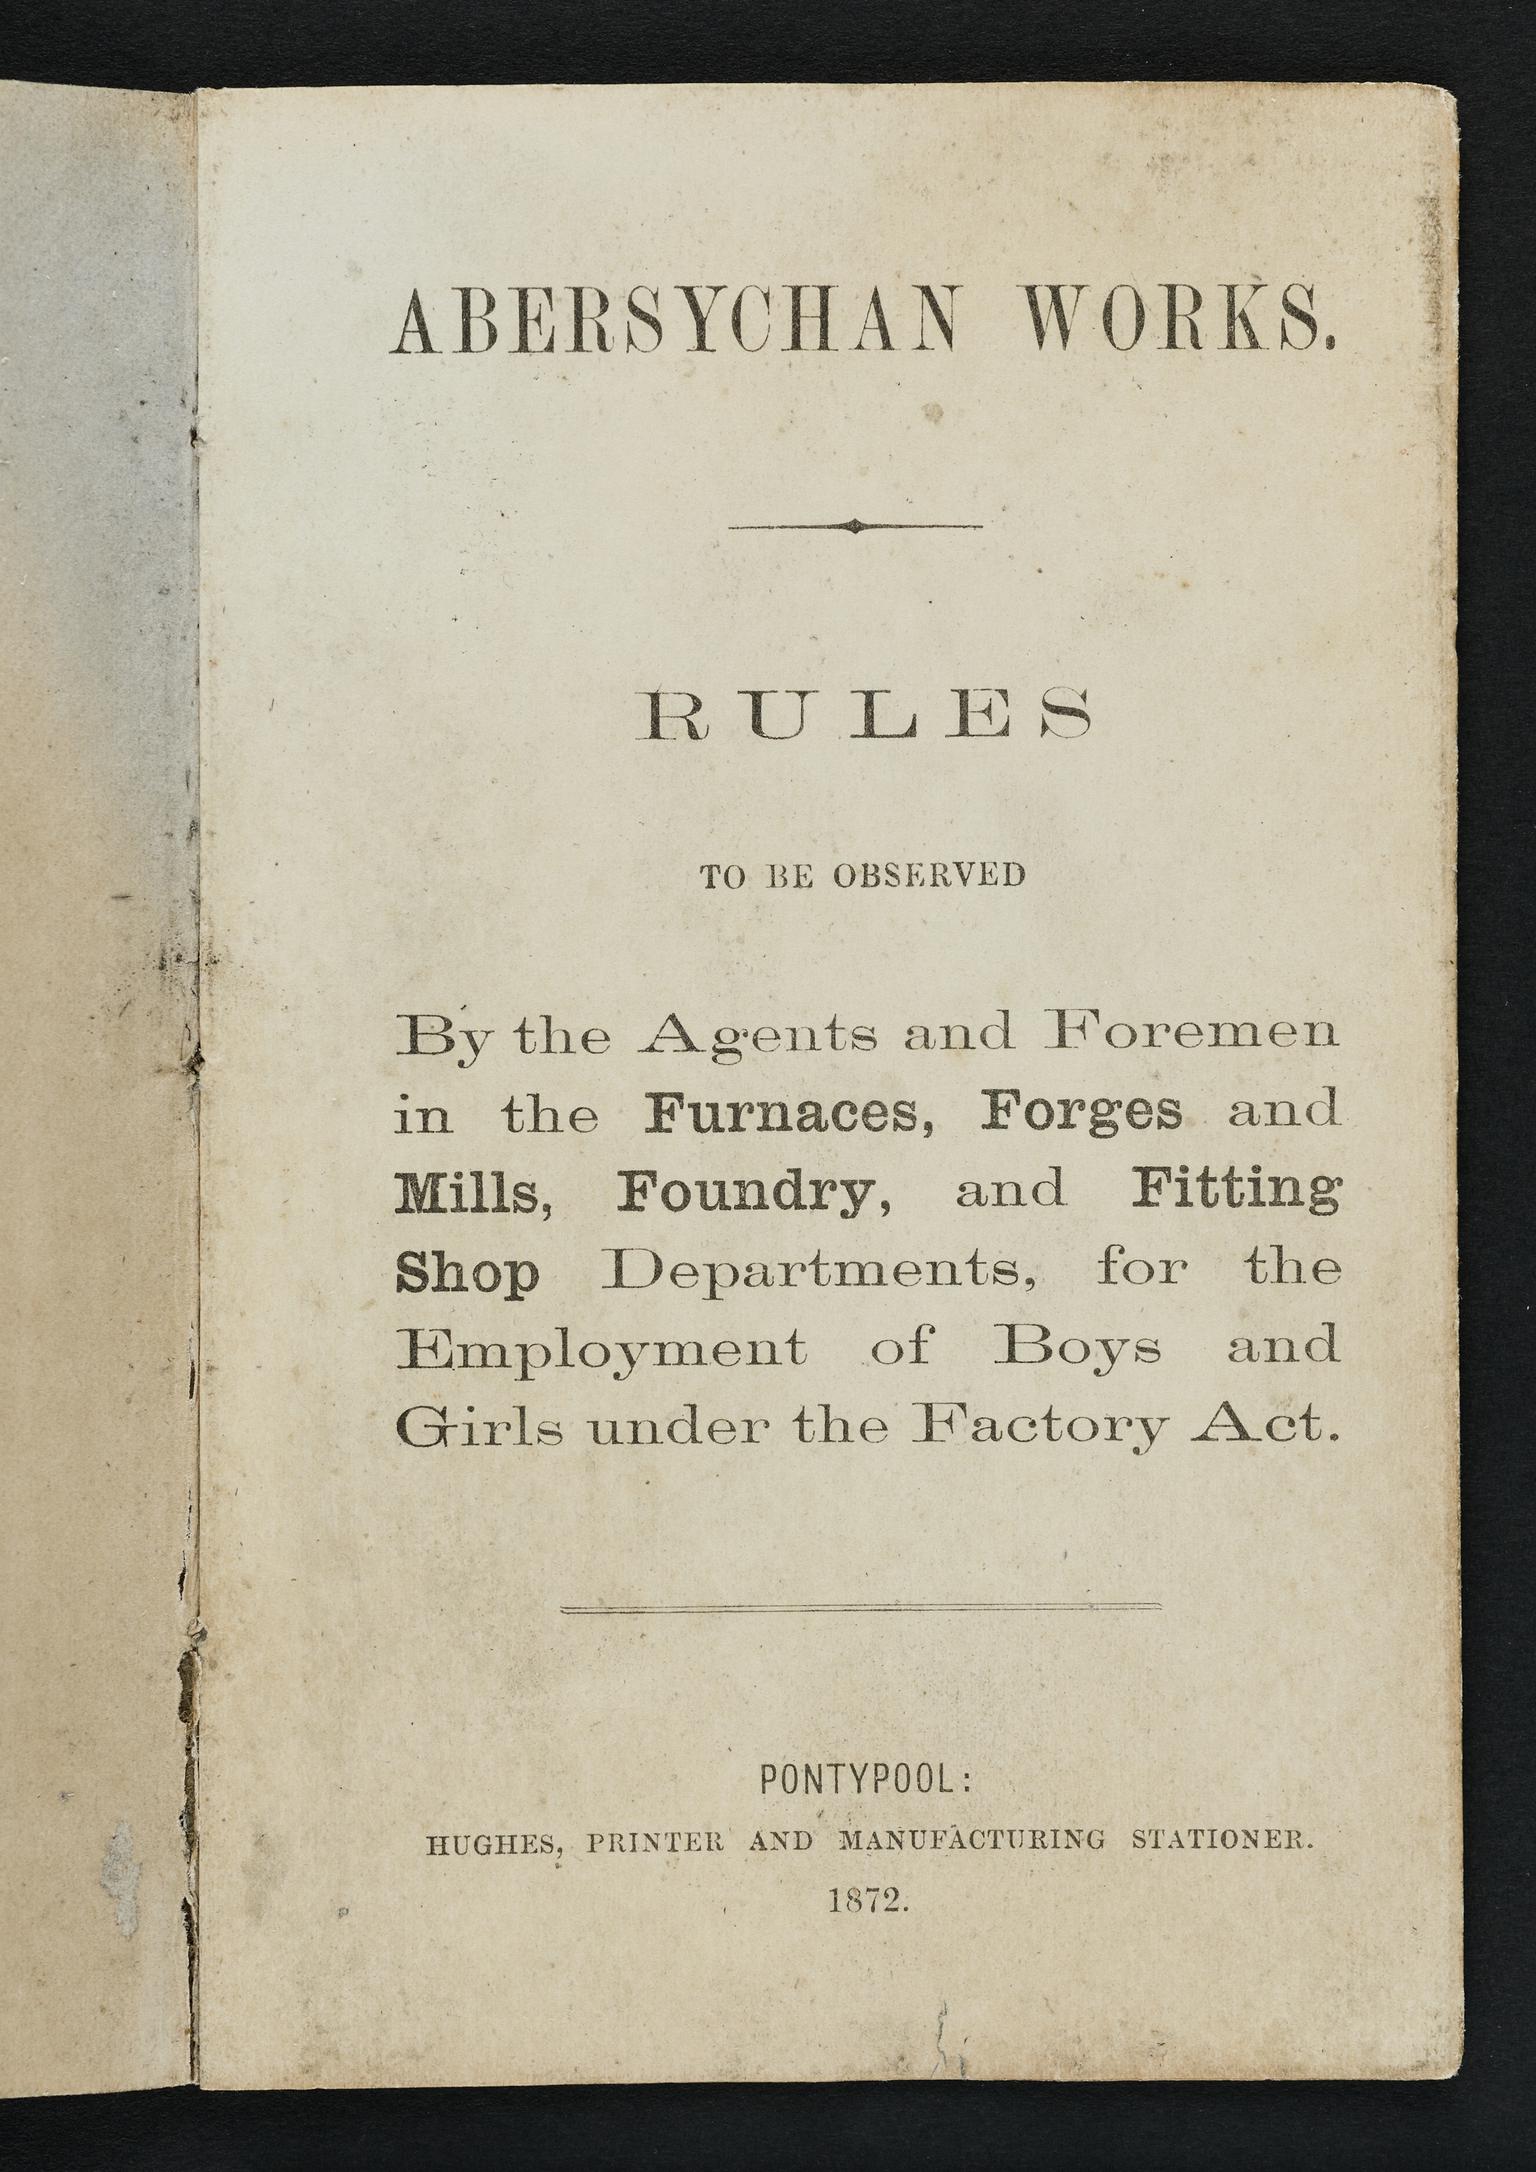 Abersychan works, rule book